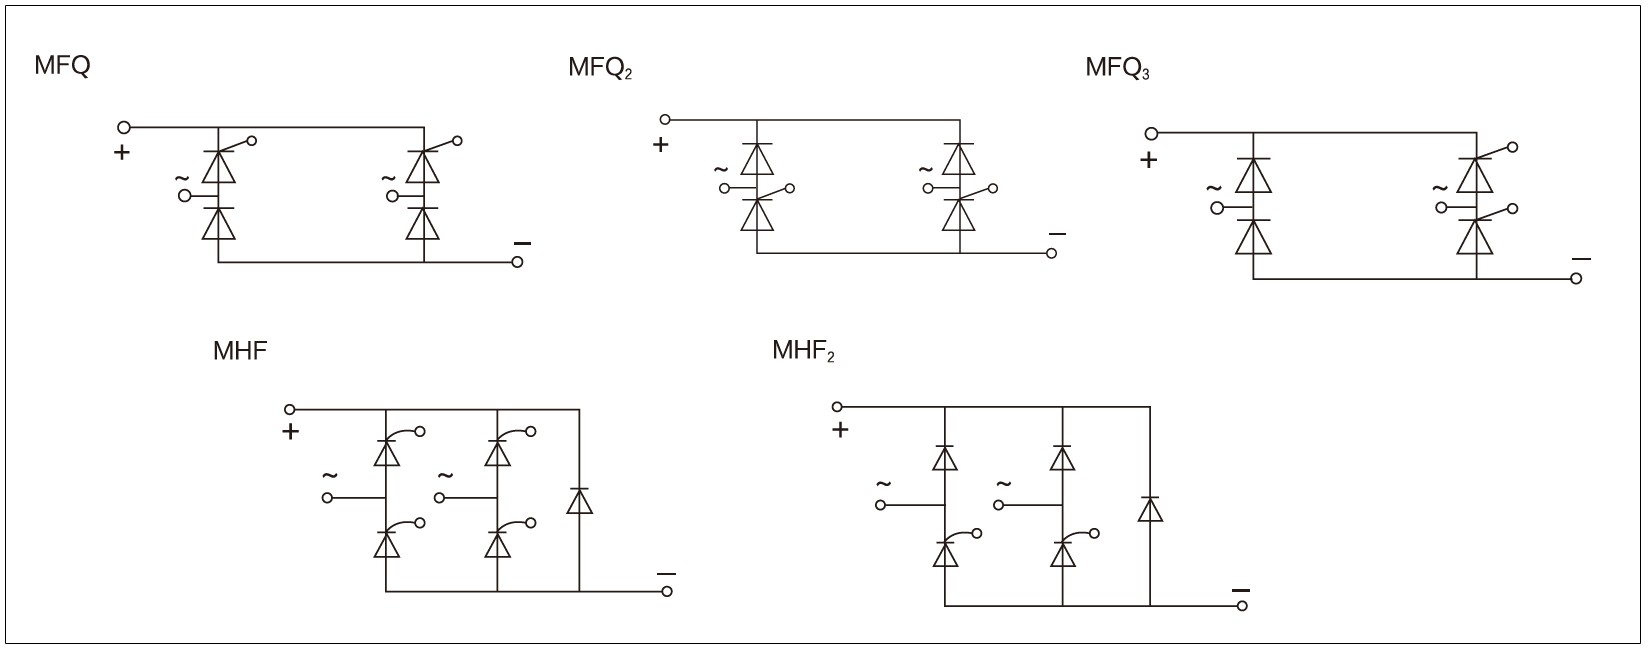 MFQ, MTF, MHF Series Diagram